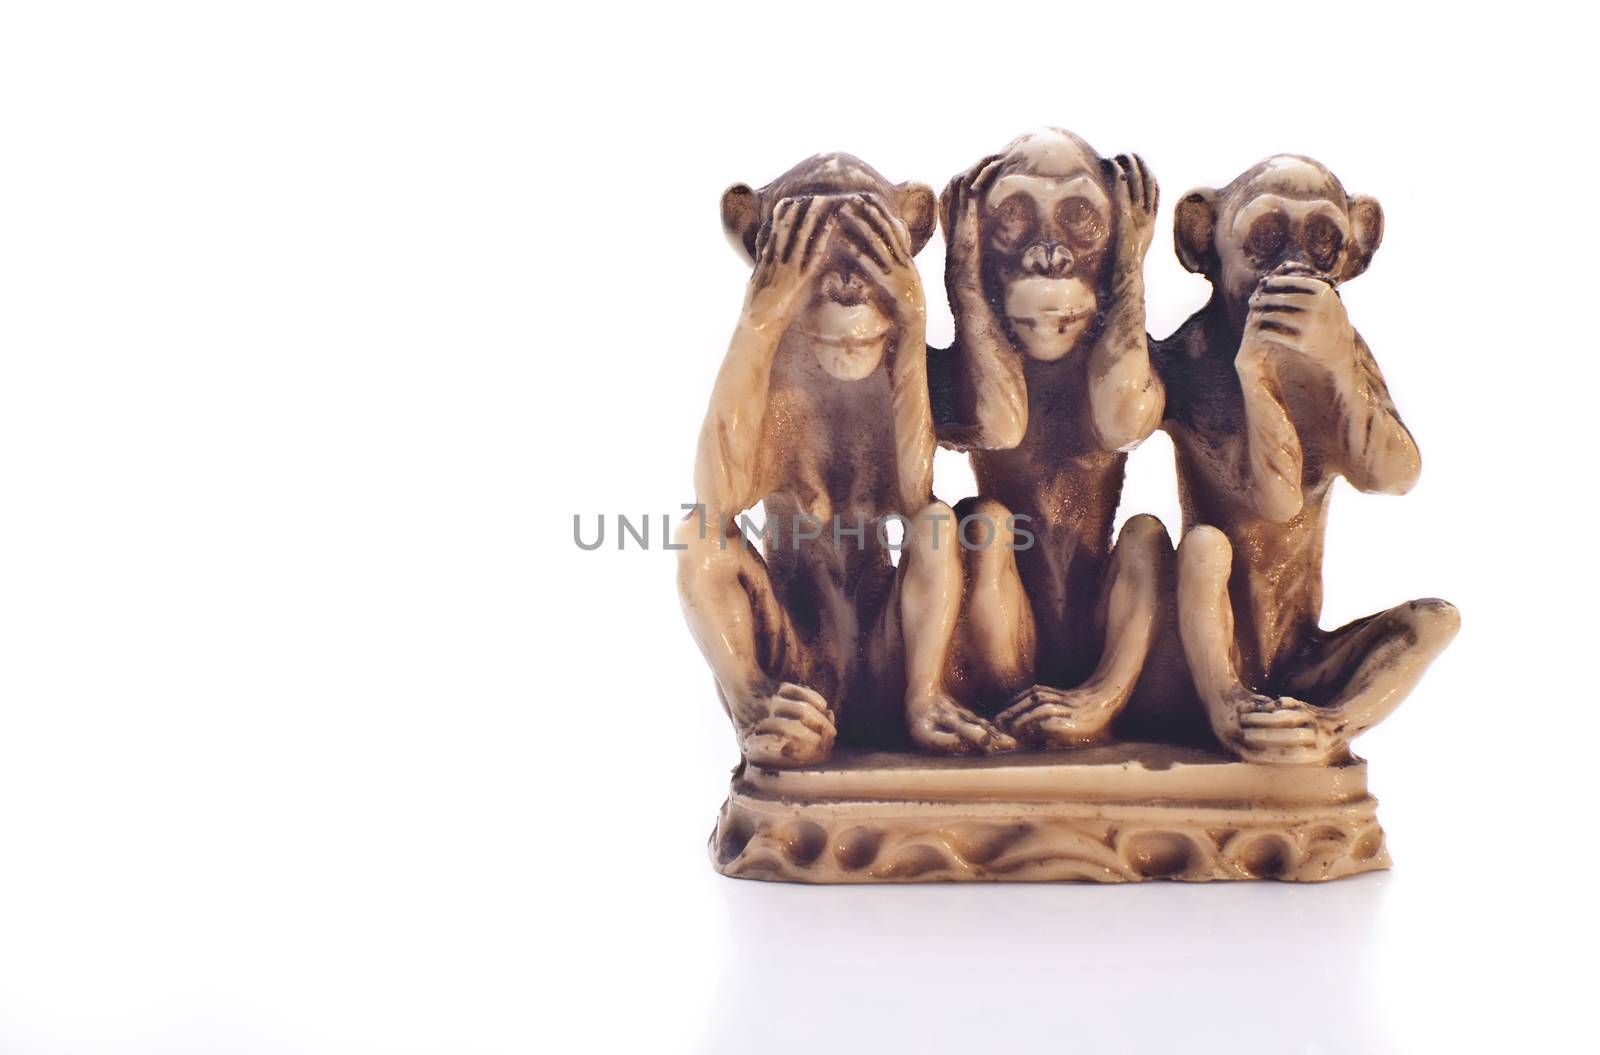 Three wise monkeys- code of silence